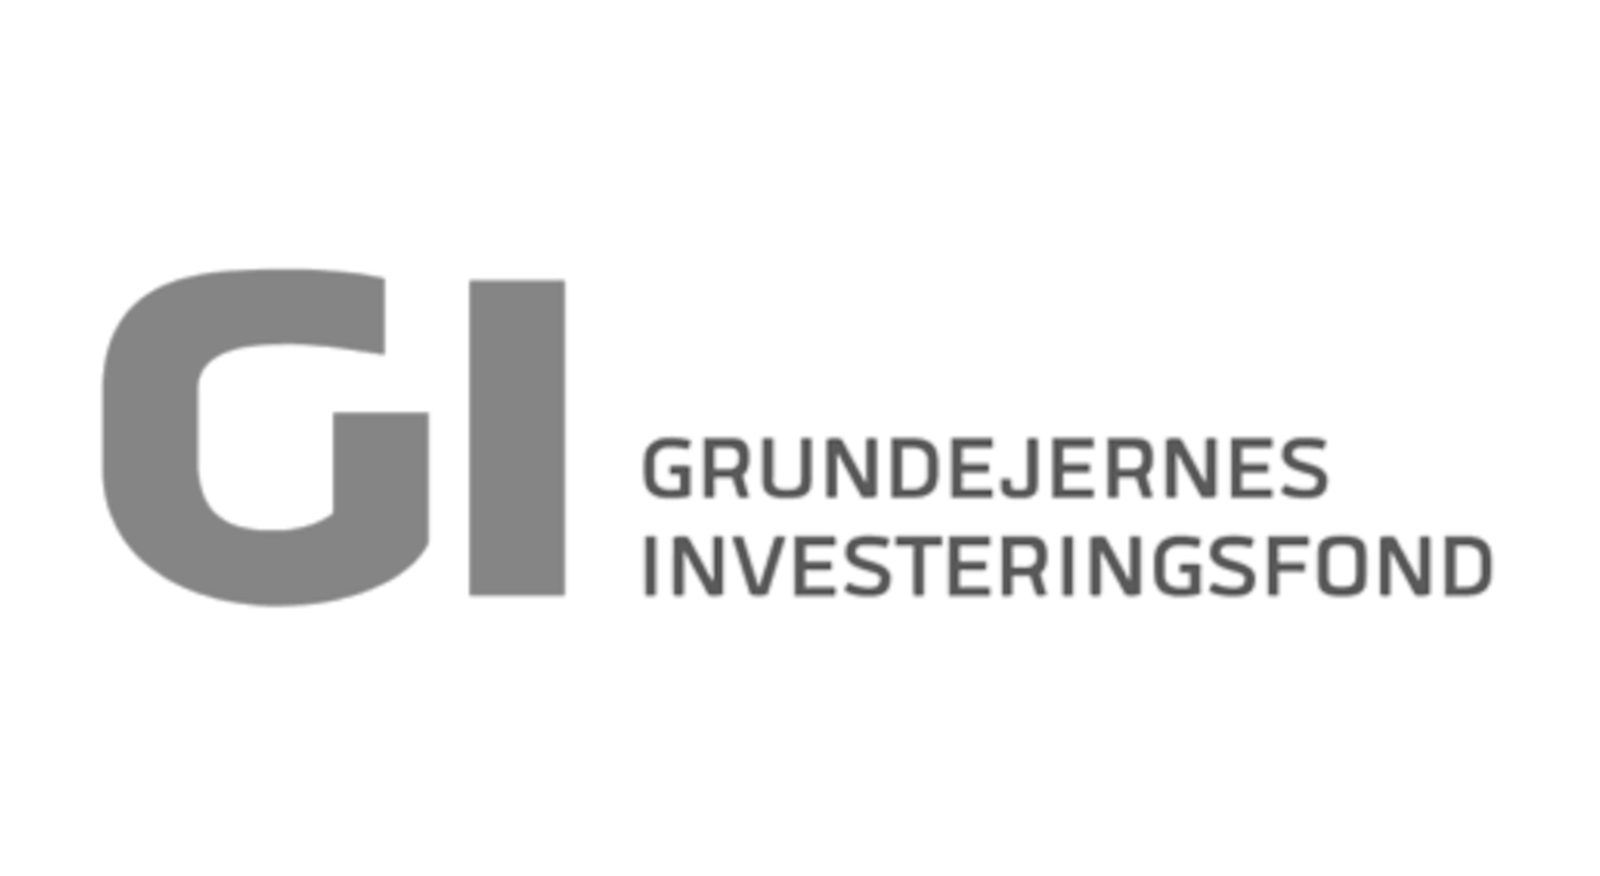 grundejernes-investeringsfond-grayscaled-2